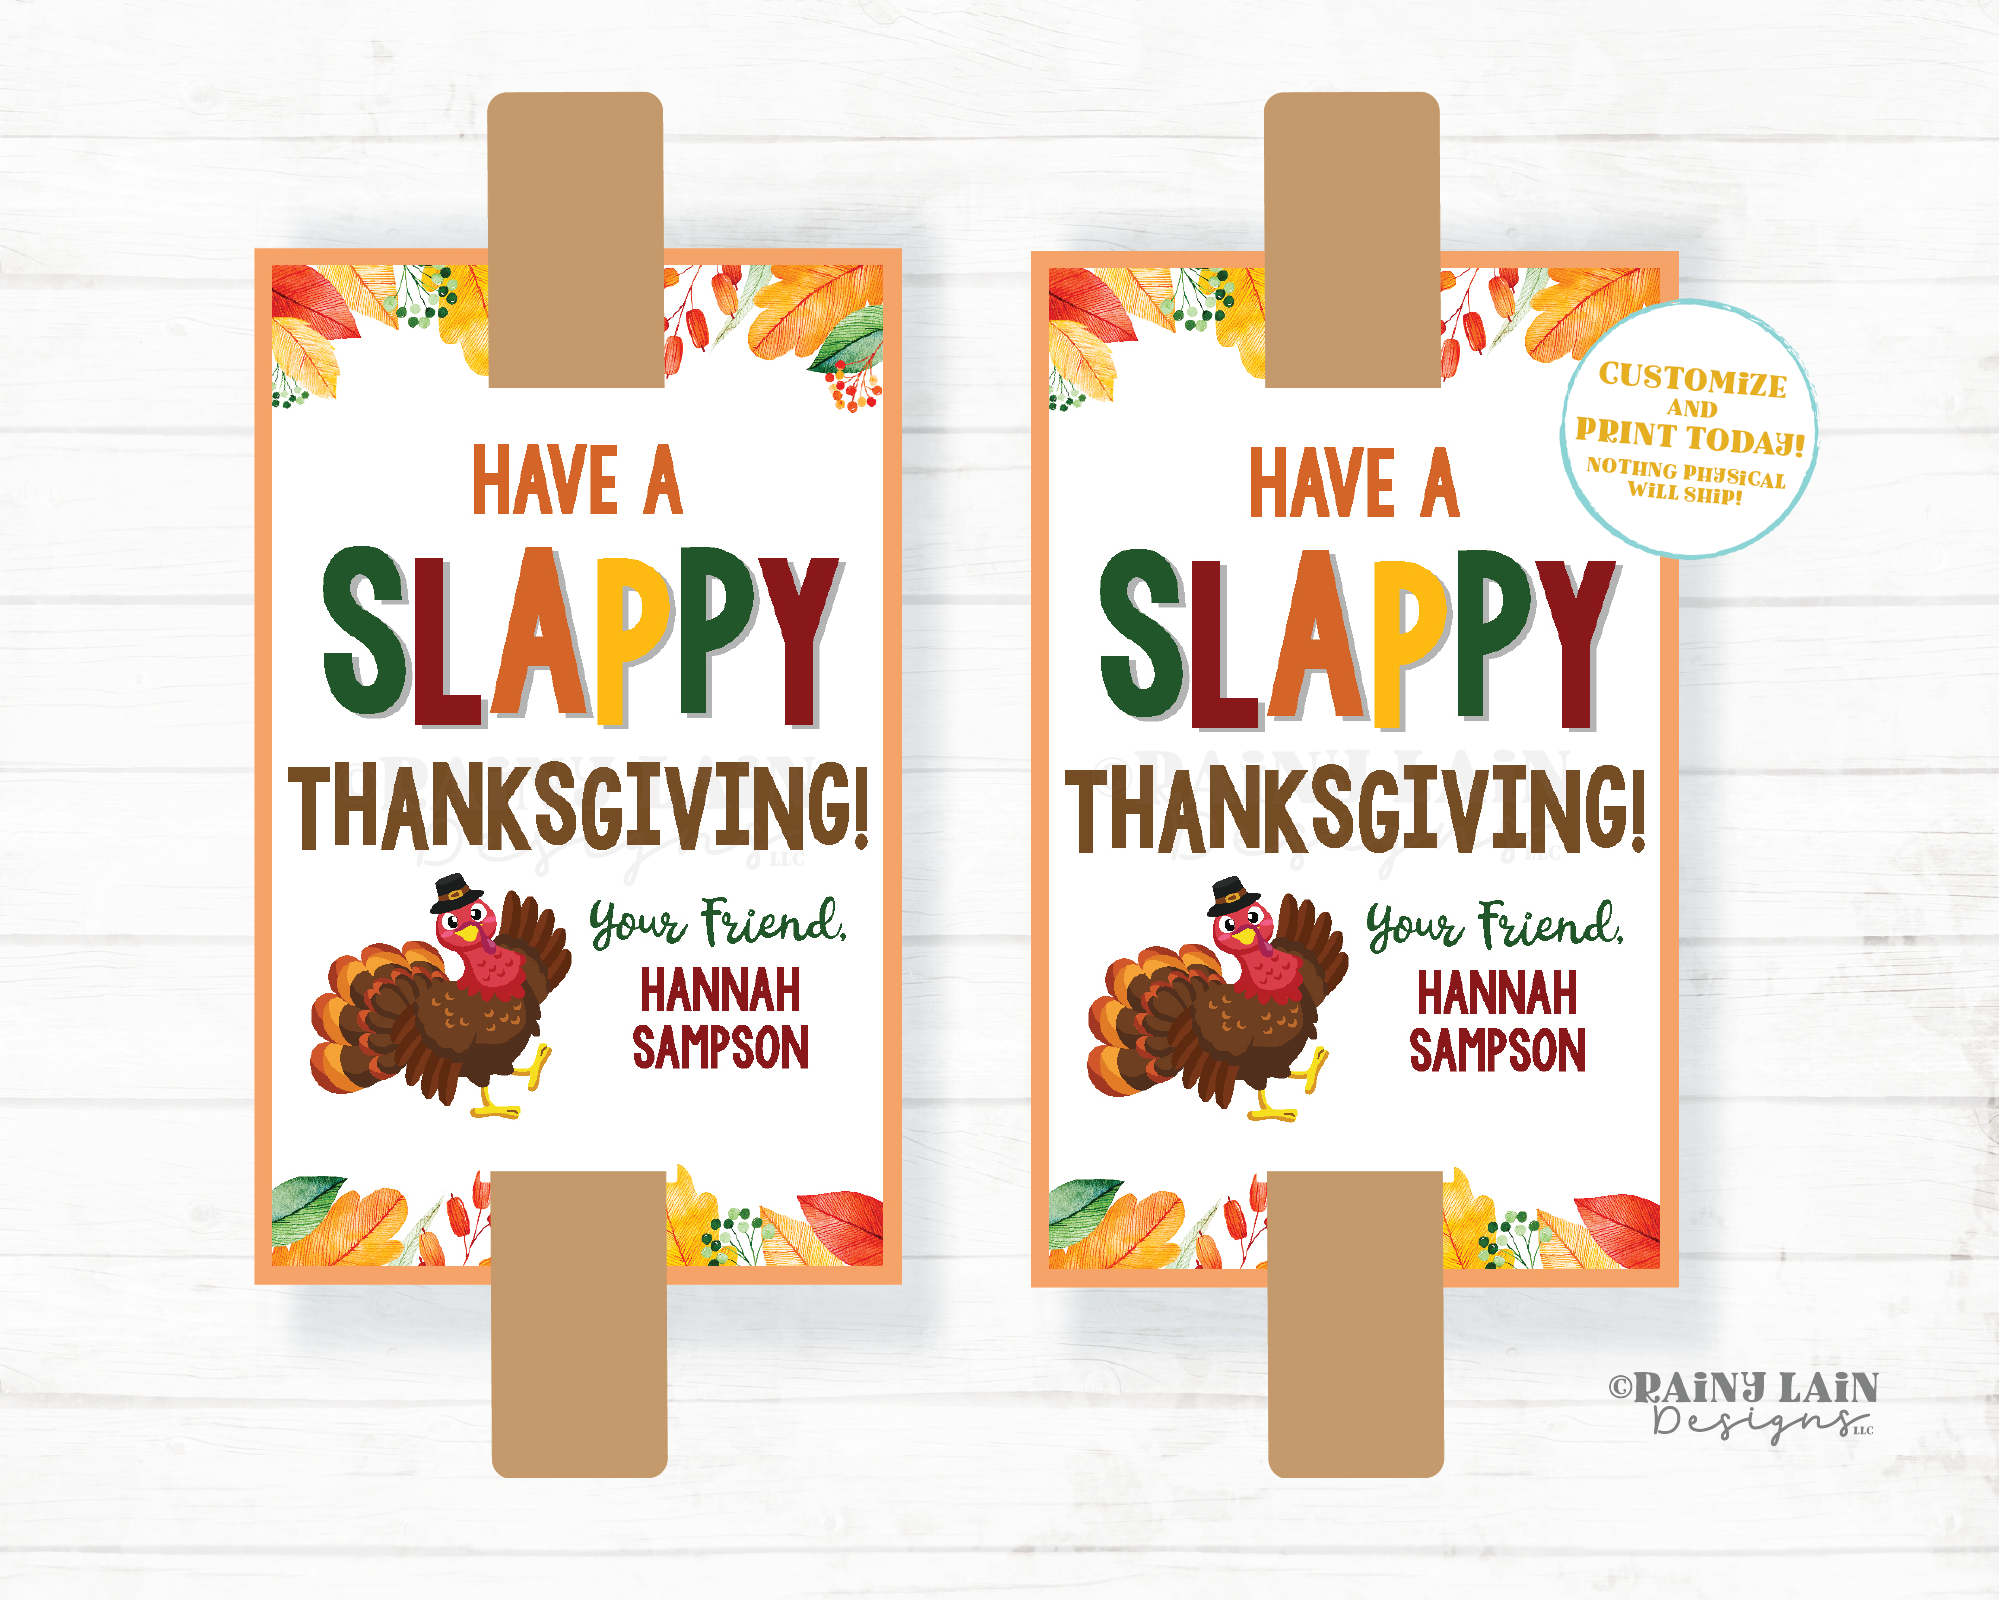 Slappy Thanksgiving Tag Slap Bracelet Card Happy Thanksgiving Gift Tags Preschool Classroom Printable Kids Non-Candy Editable Ideas